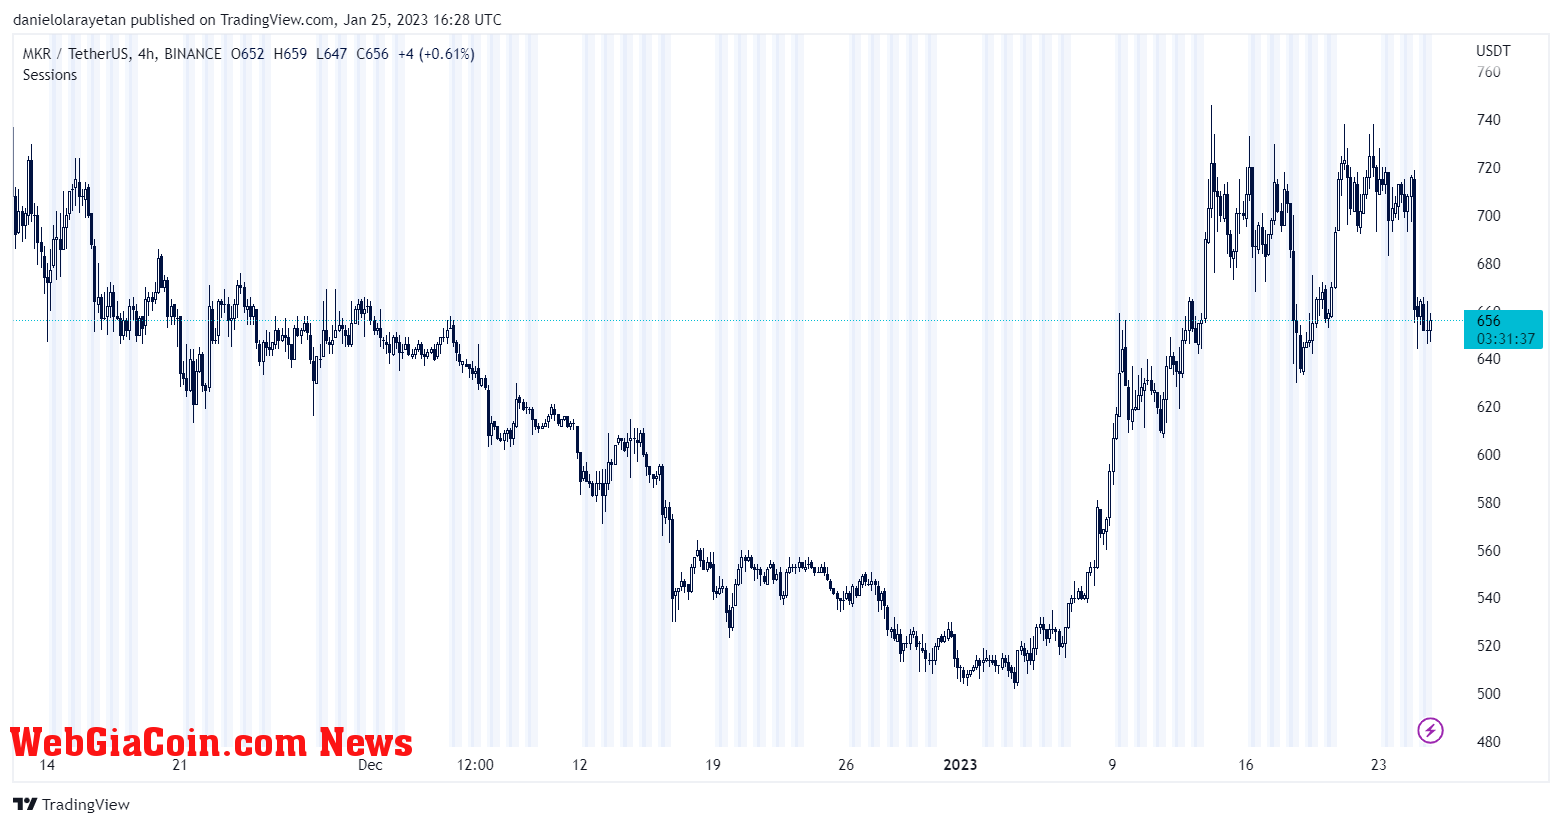 MKRUSDT price chart on TradingView